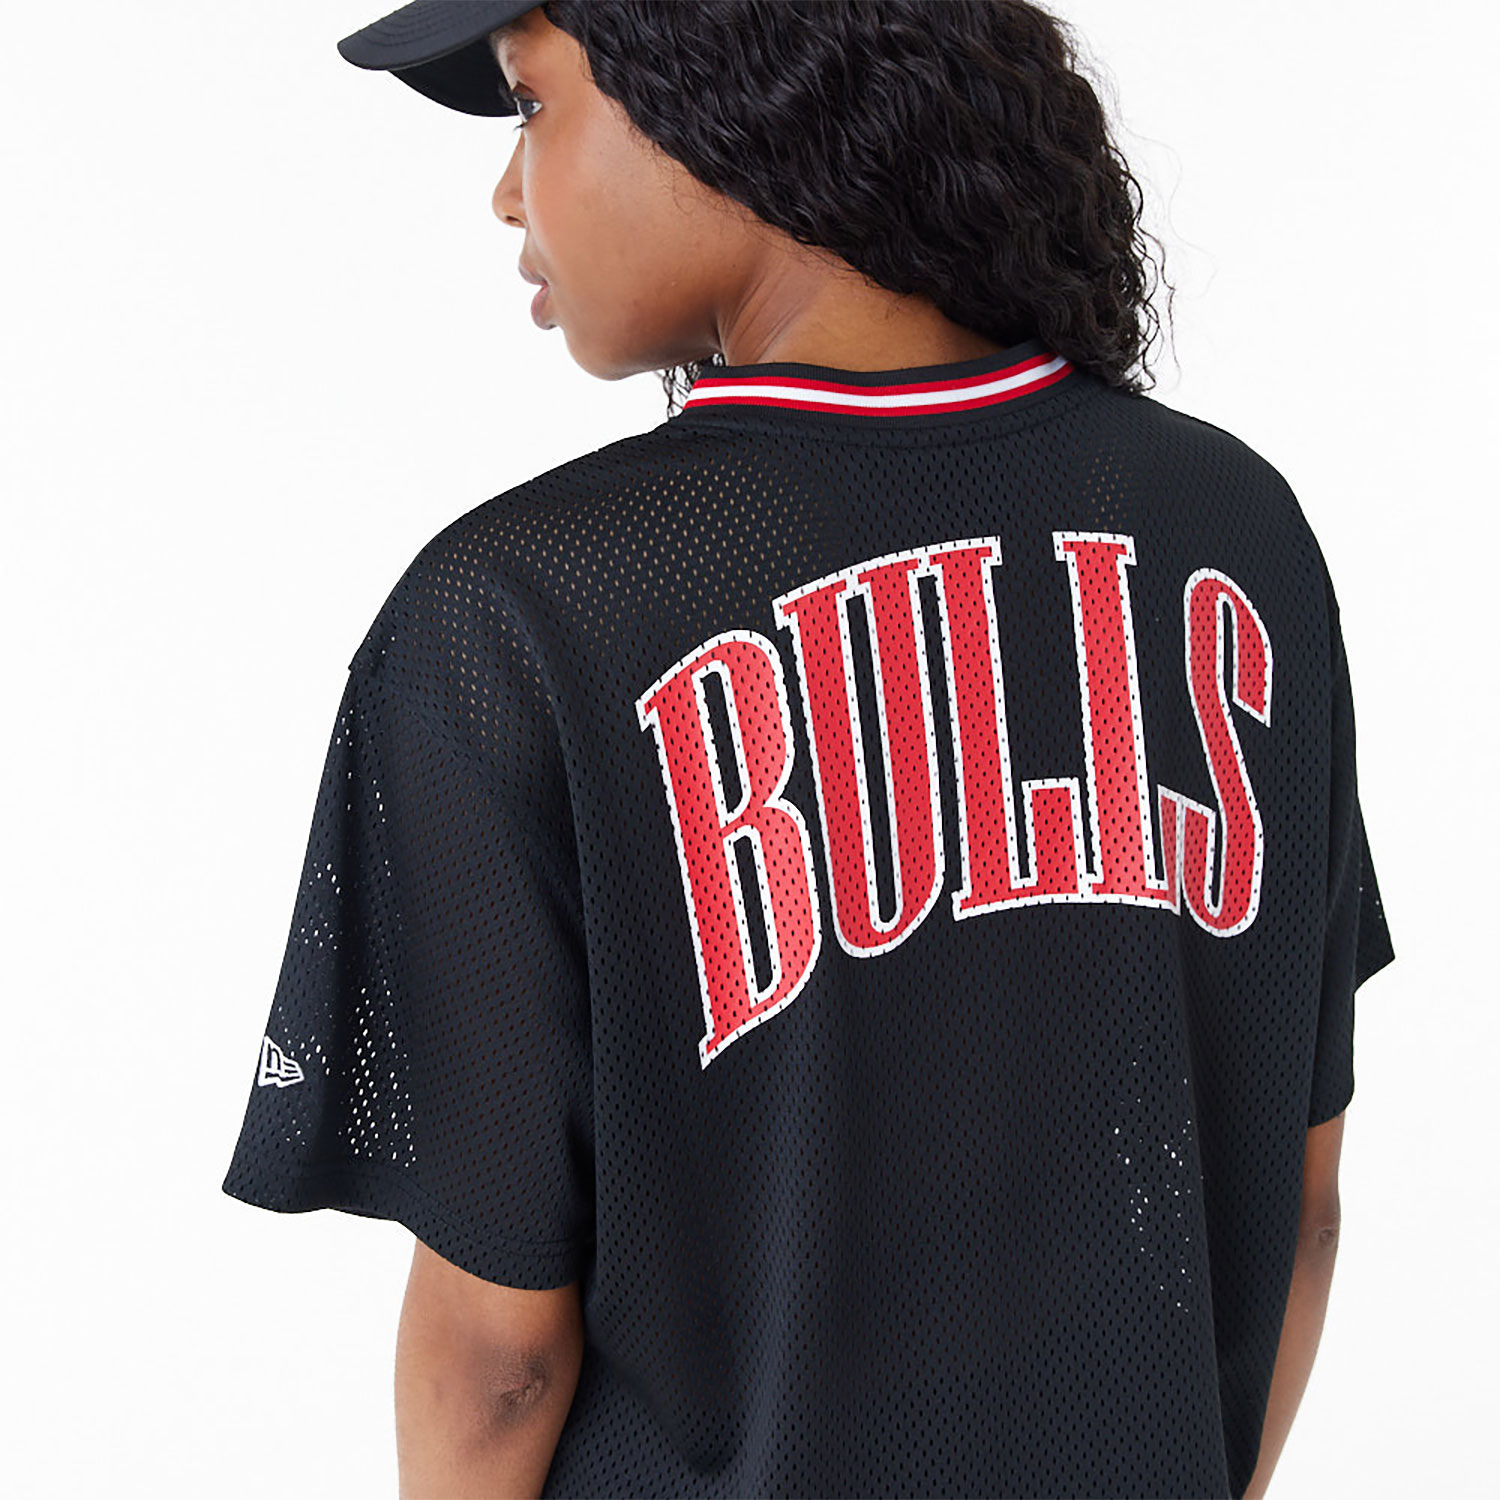 Chicago Bulls Womens NBA Black Mesh Dress